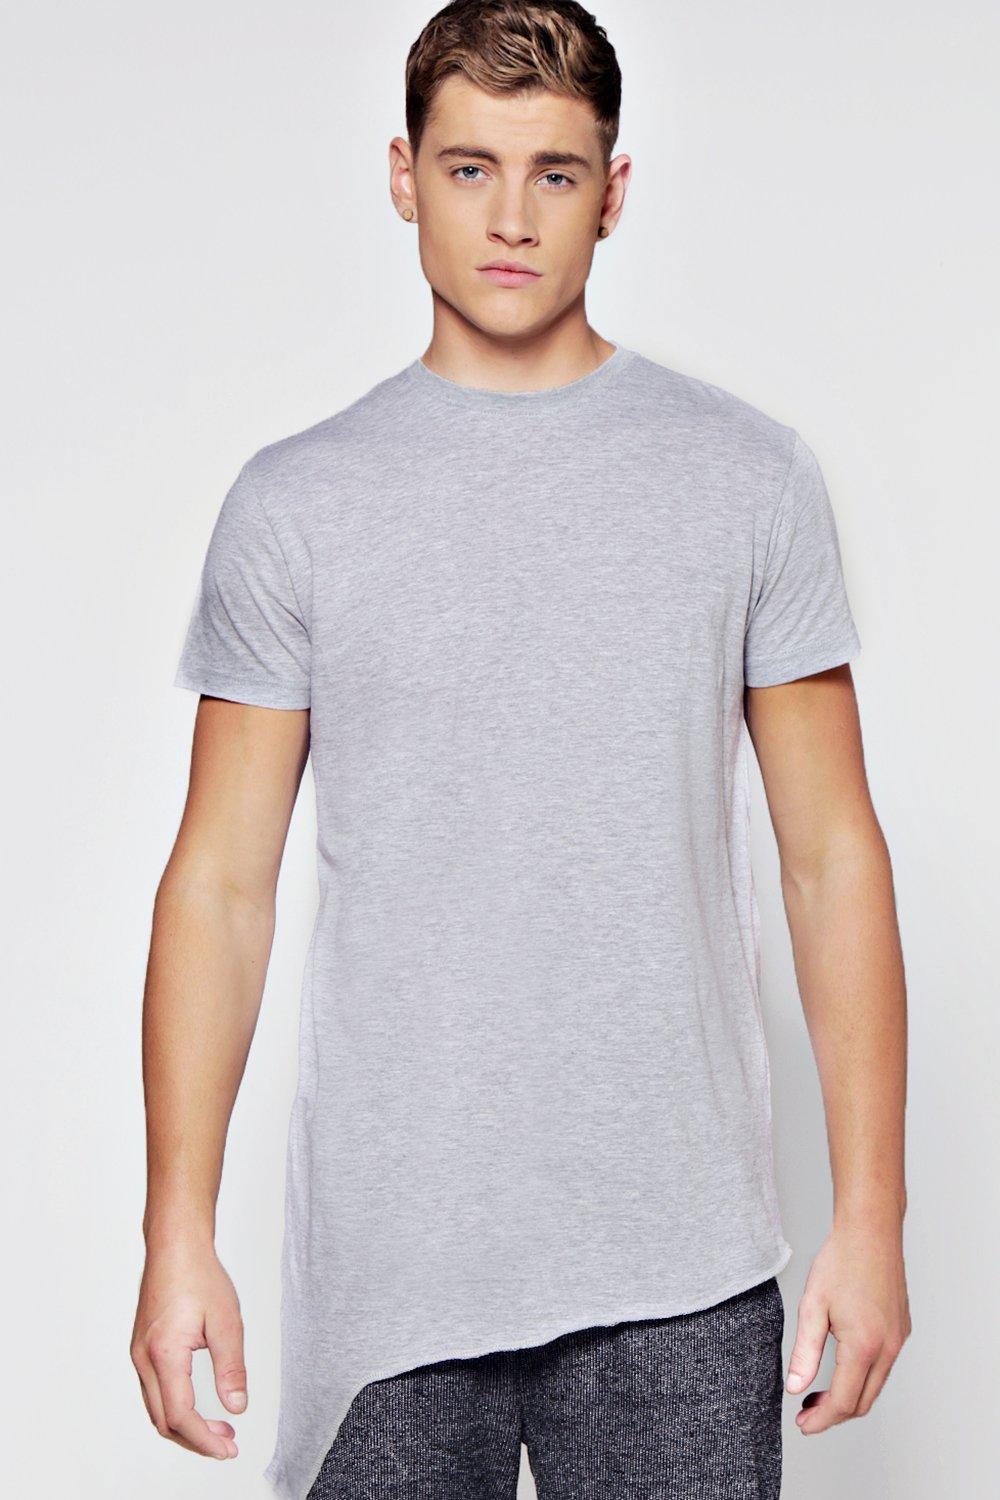 Boohoo Mens Longline Stepped Hem Asymmetric T Shirt | eBay